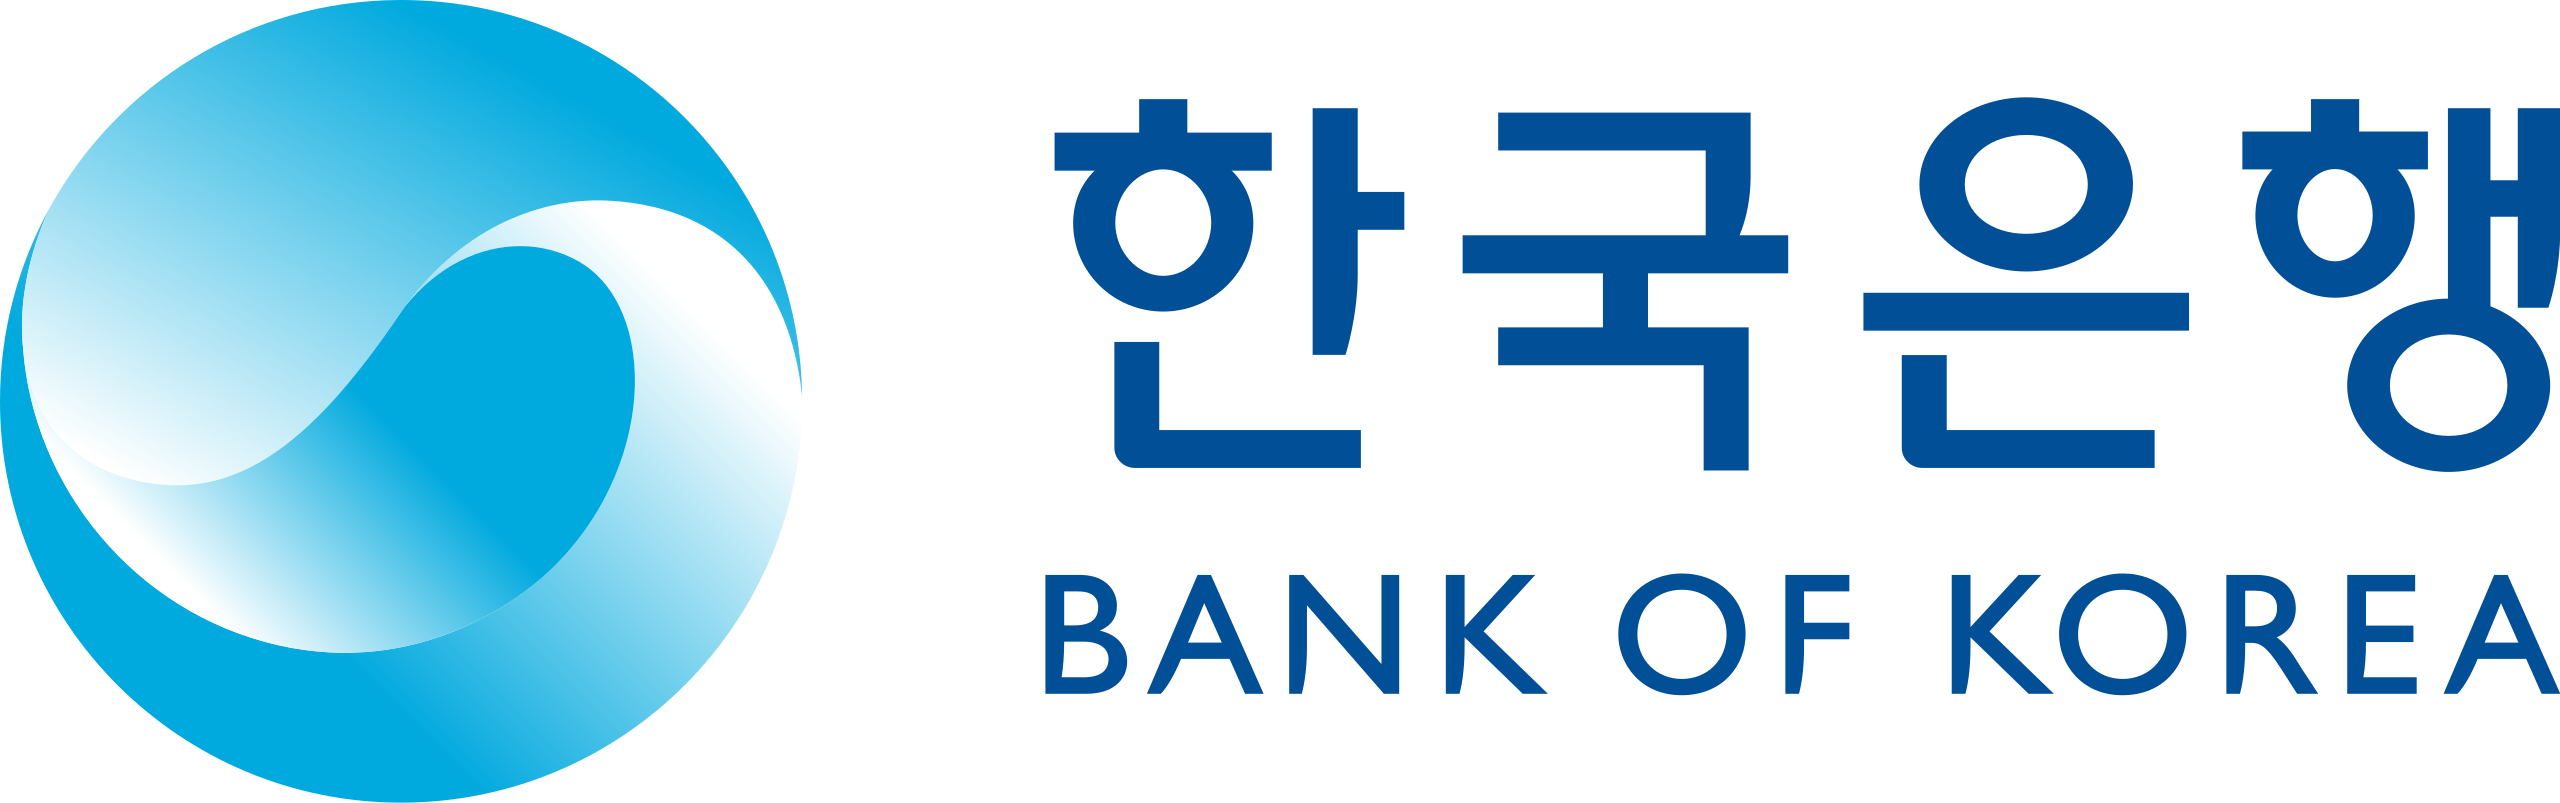 Bank Of Korea